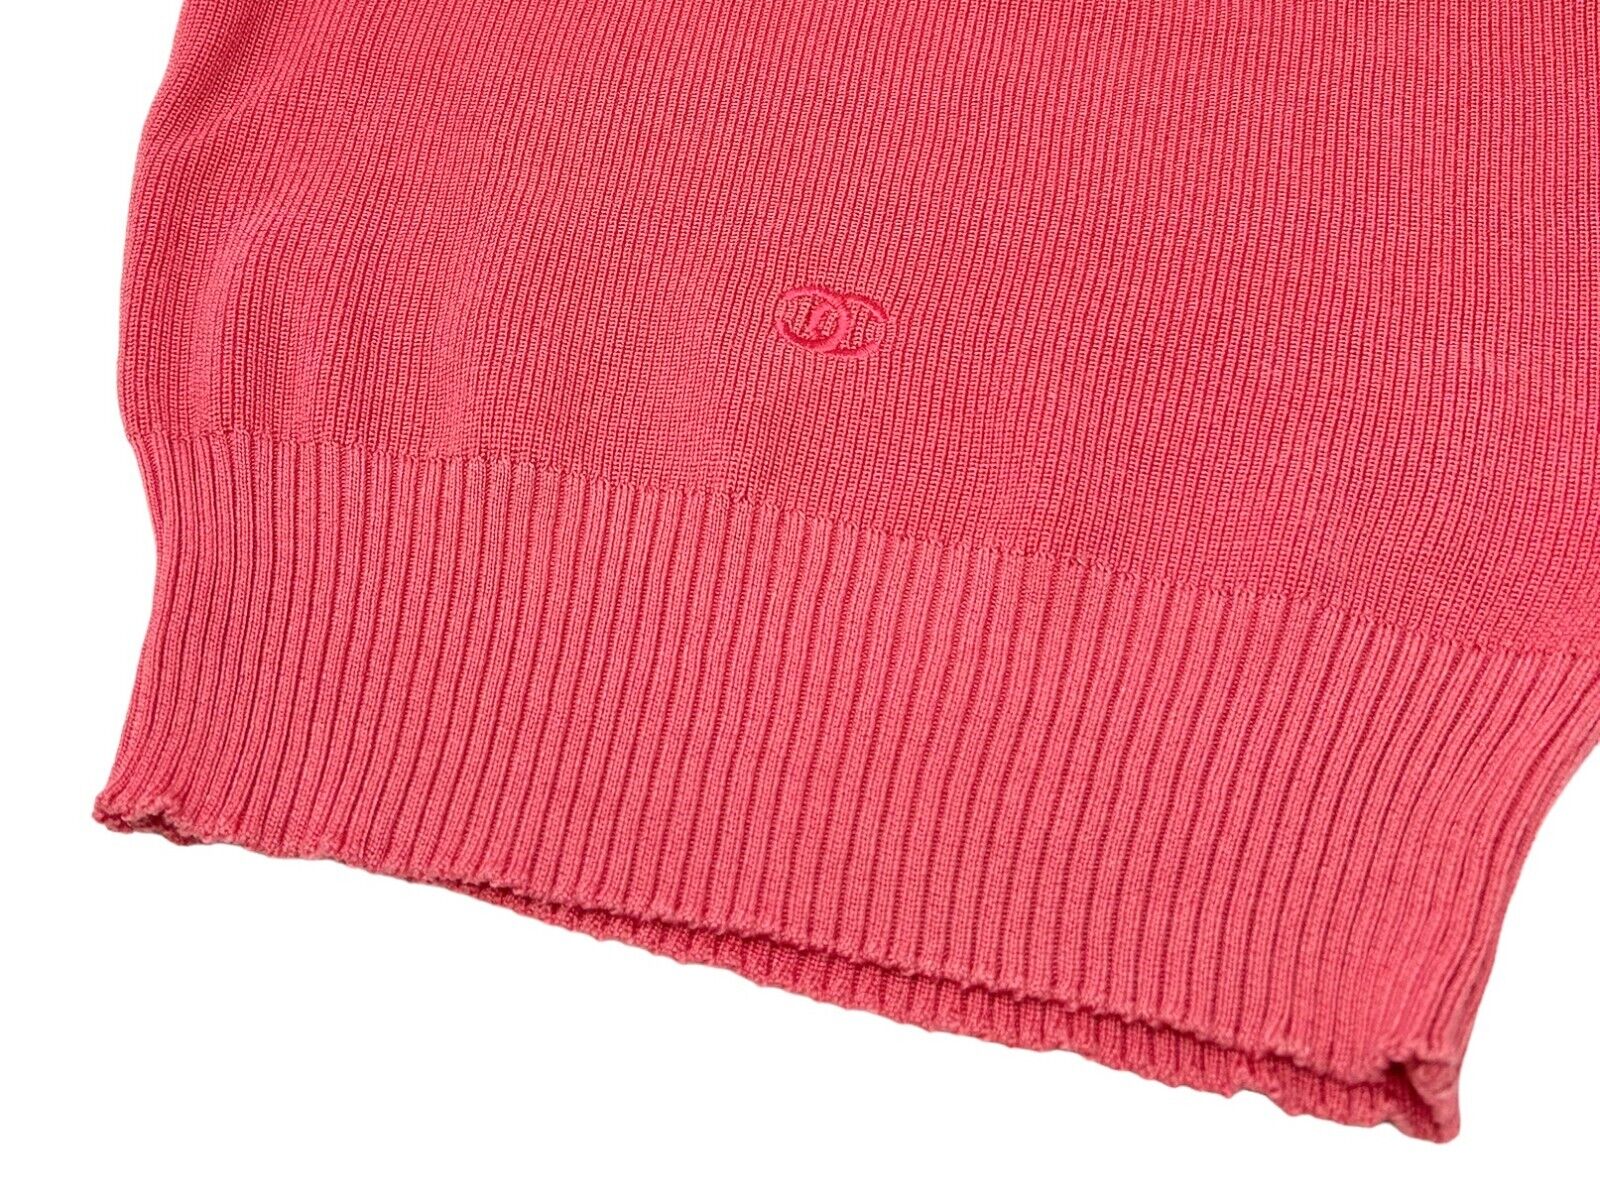 CHANEL 96P Vintage Coco Mark Rib Top #38 Knit Pink Viscose Cotton Button RankAB